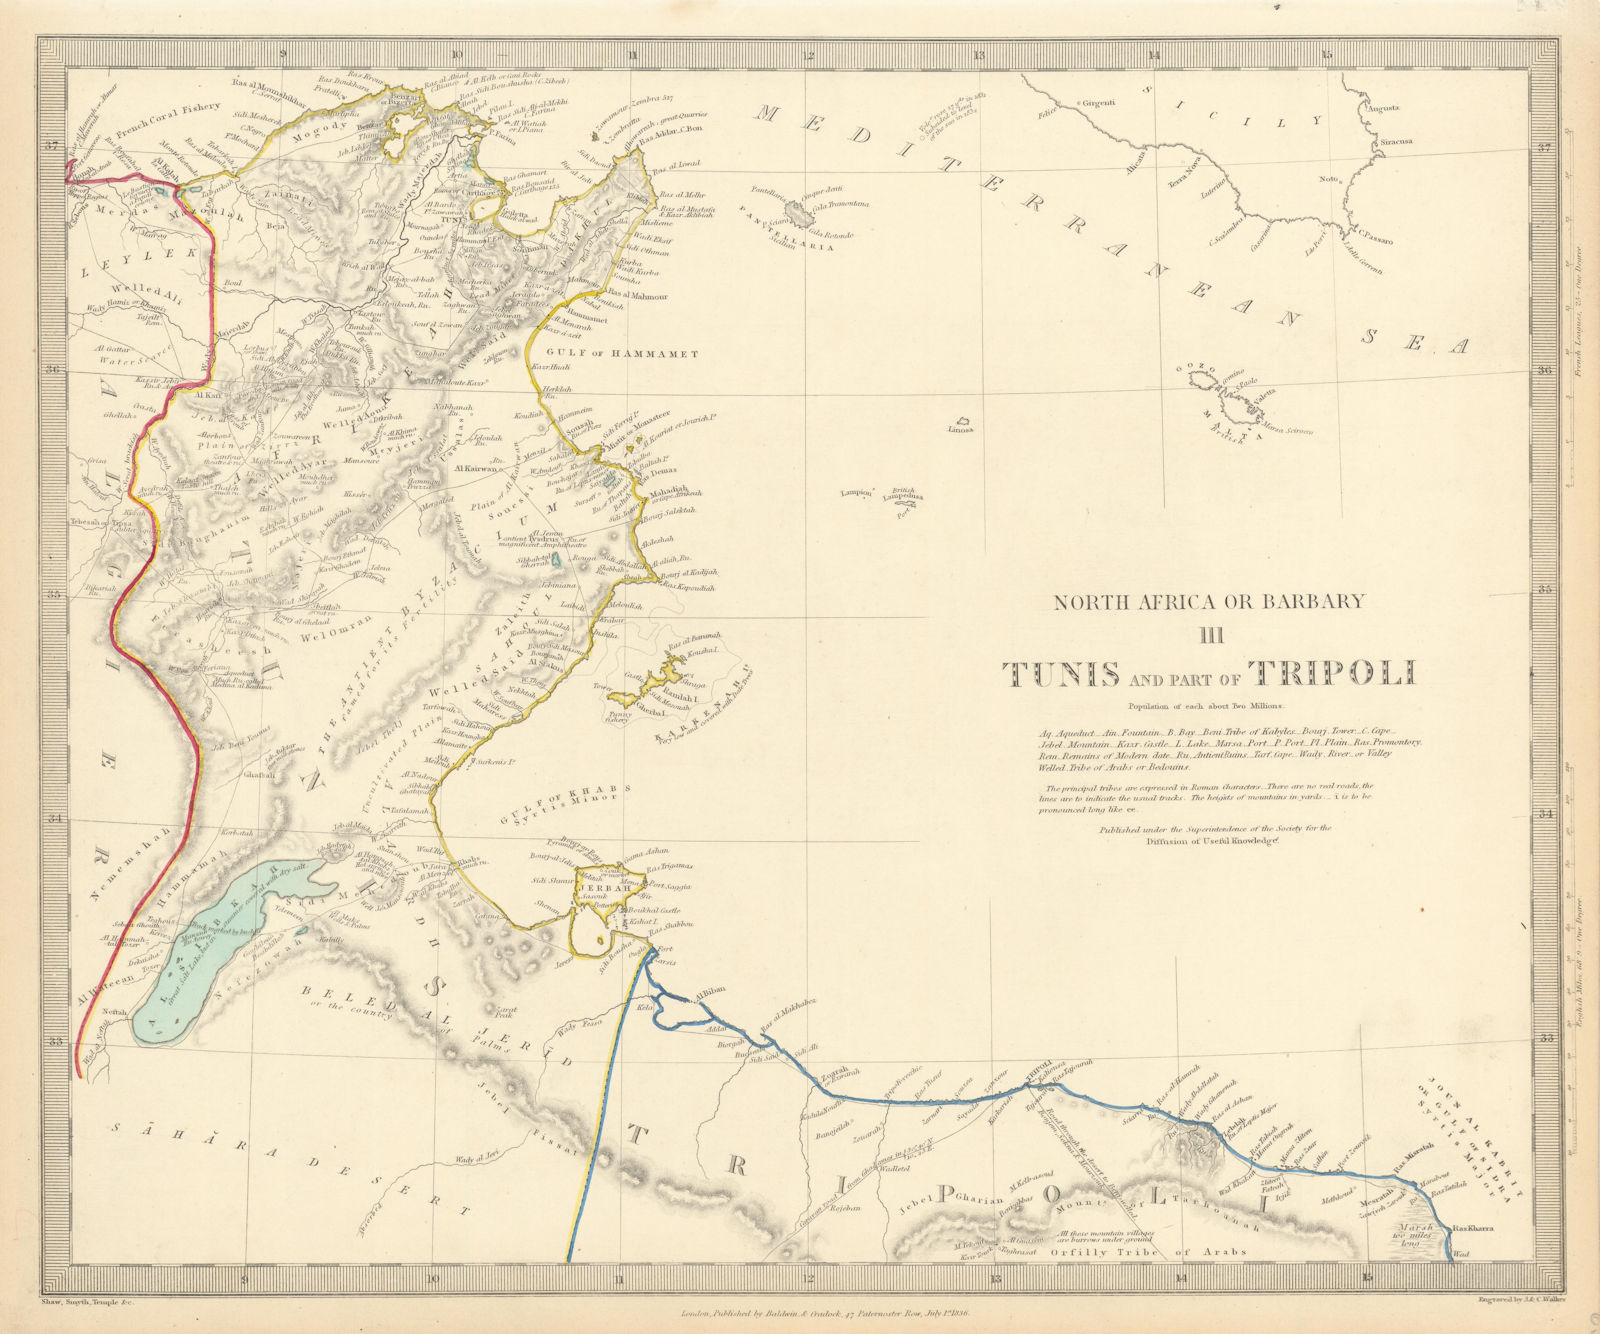 Associate Product TUNISIA LIBYA. North Africa or Barbary. Tunis Tripoli. SDUK 1844 old map